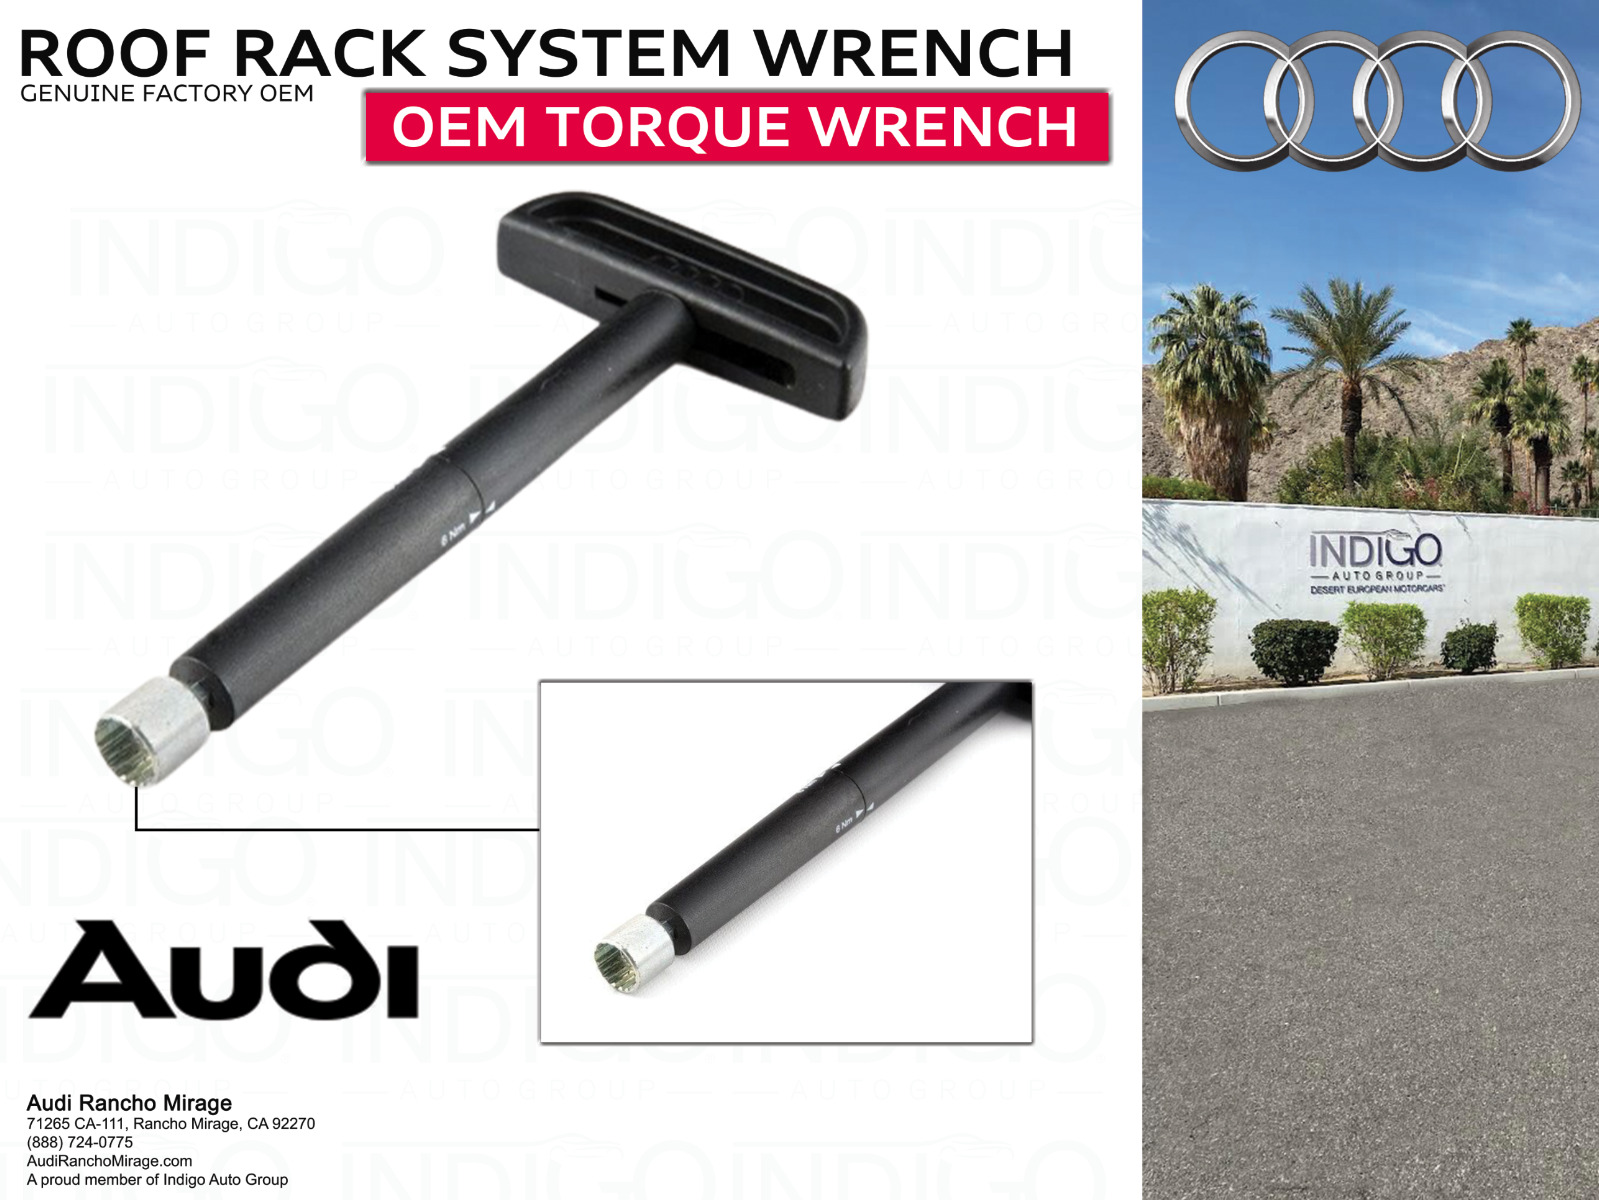 New Genuine Audi Roof Rack System Wrench Tool OEM (SEND ROOF RACK CODE)